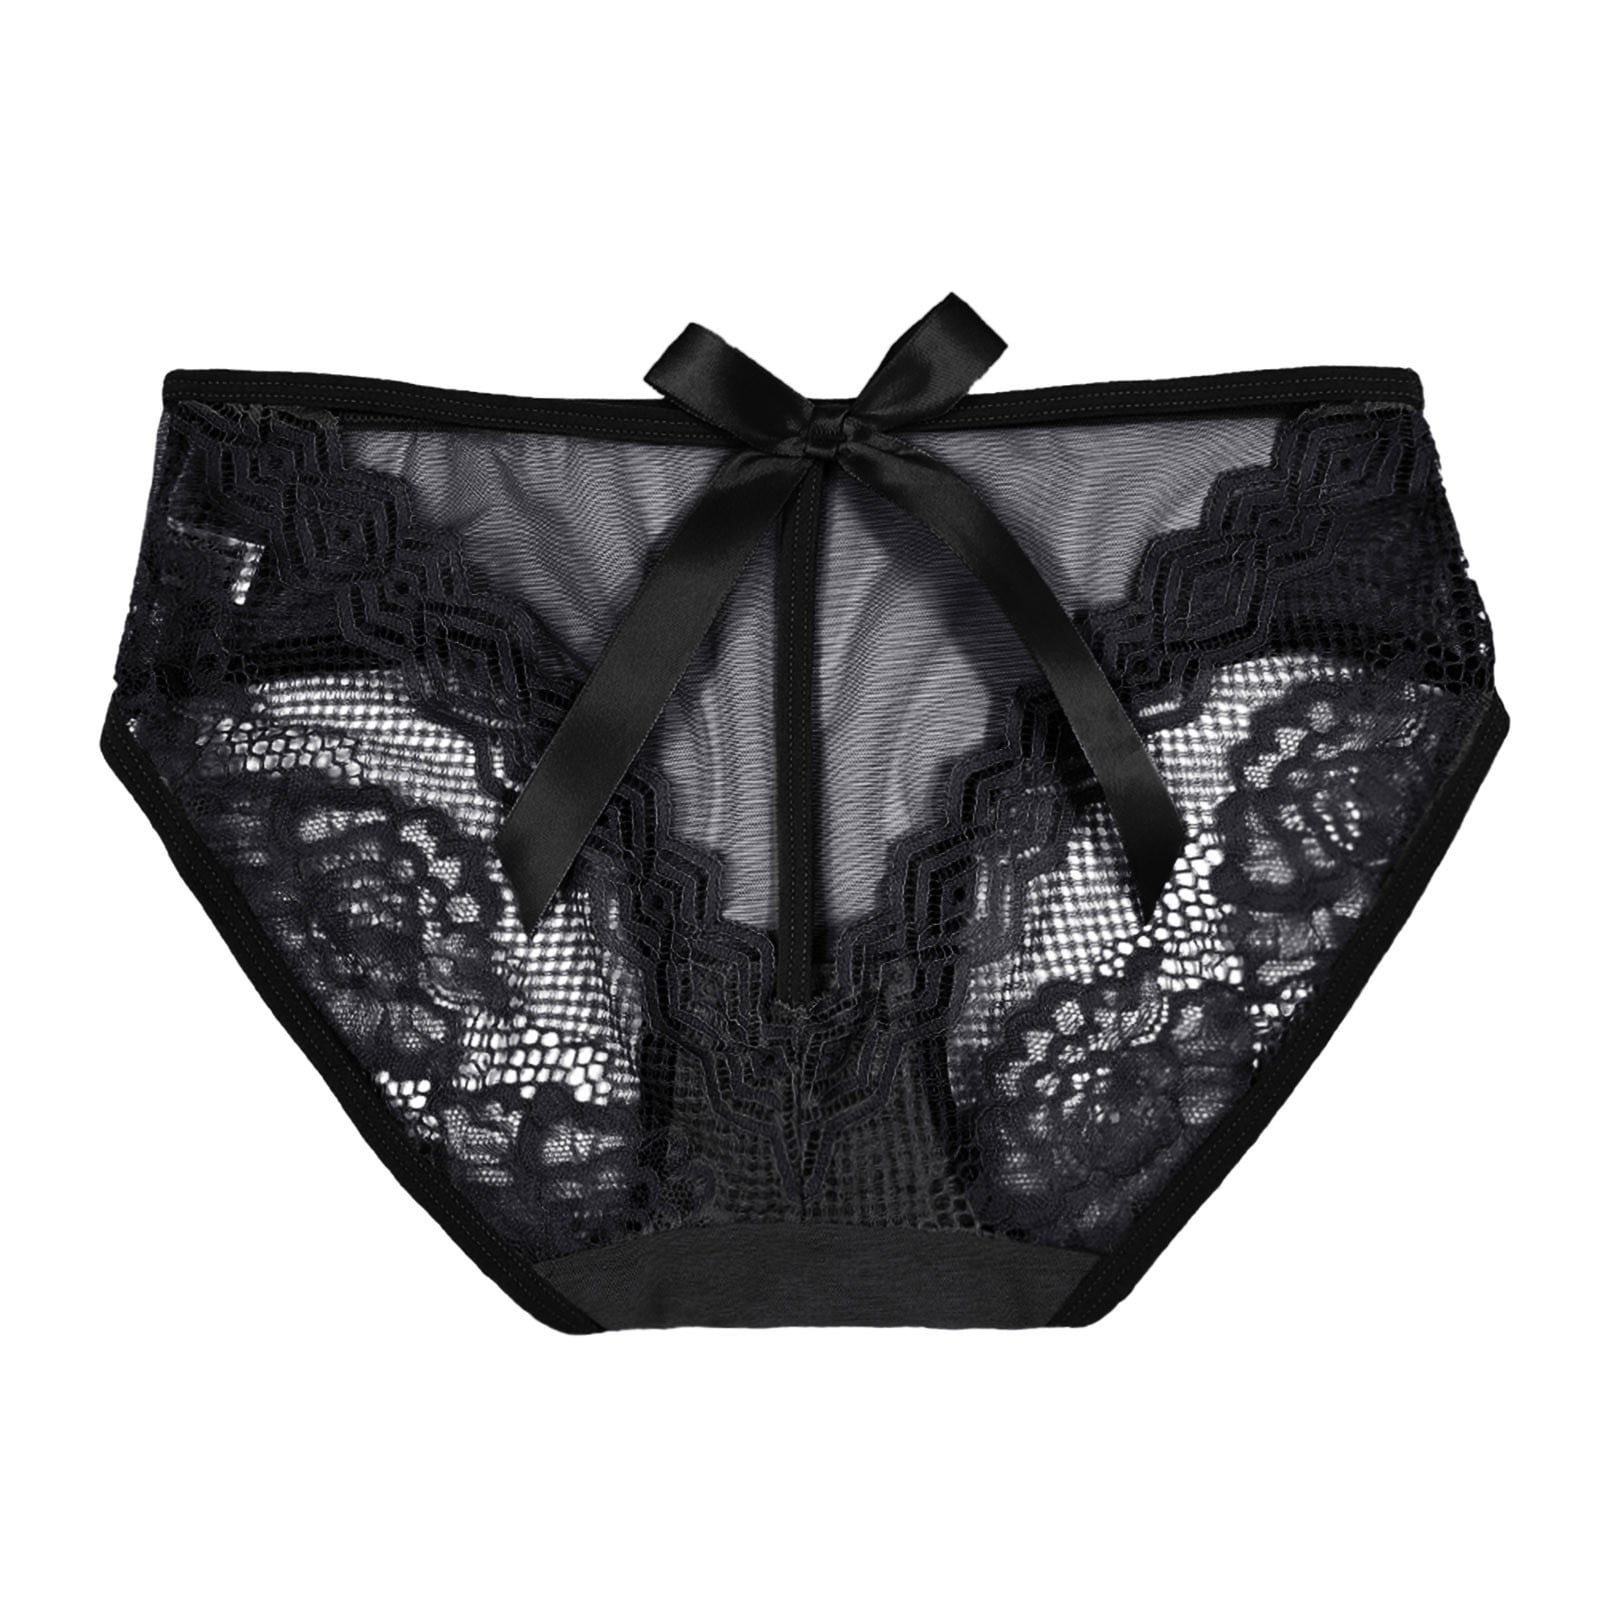 Zuwimk Cotton Thongs For Women,Womens Black Lace Thong Panties 6-Pack Cute  Lingerie Underwear Black,M